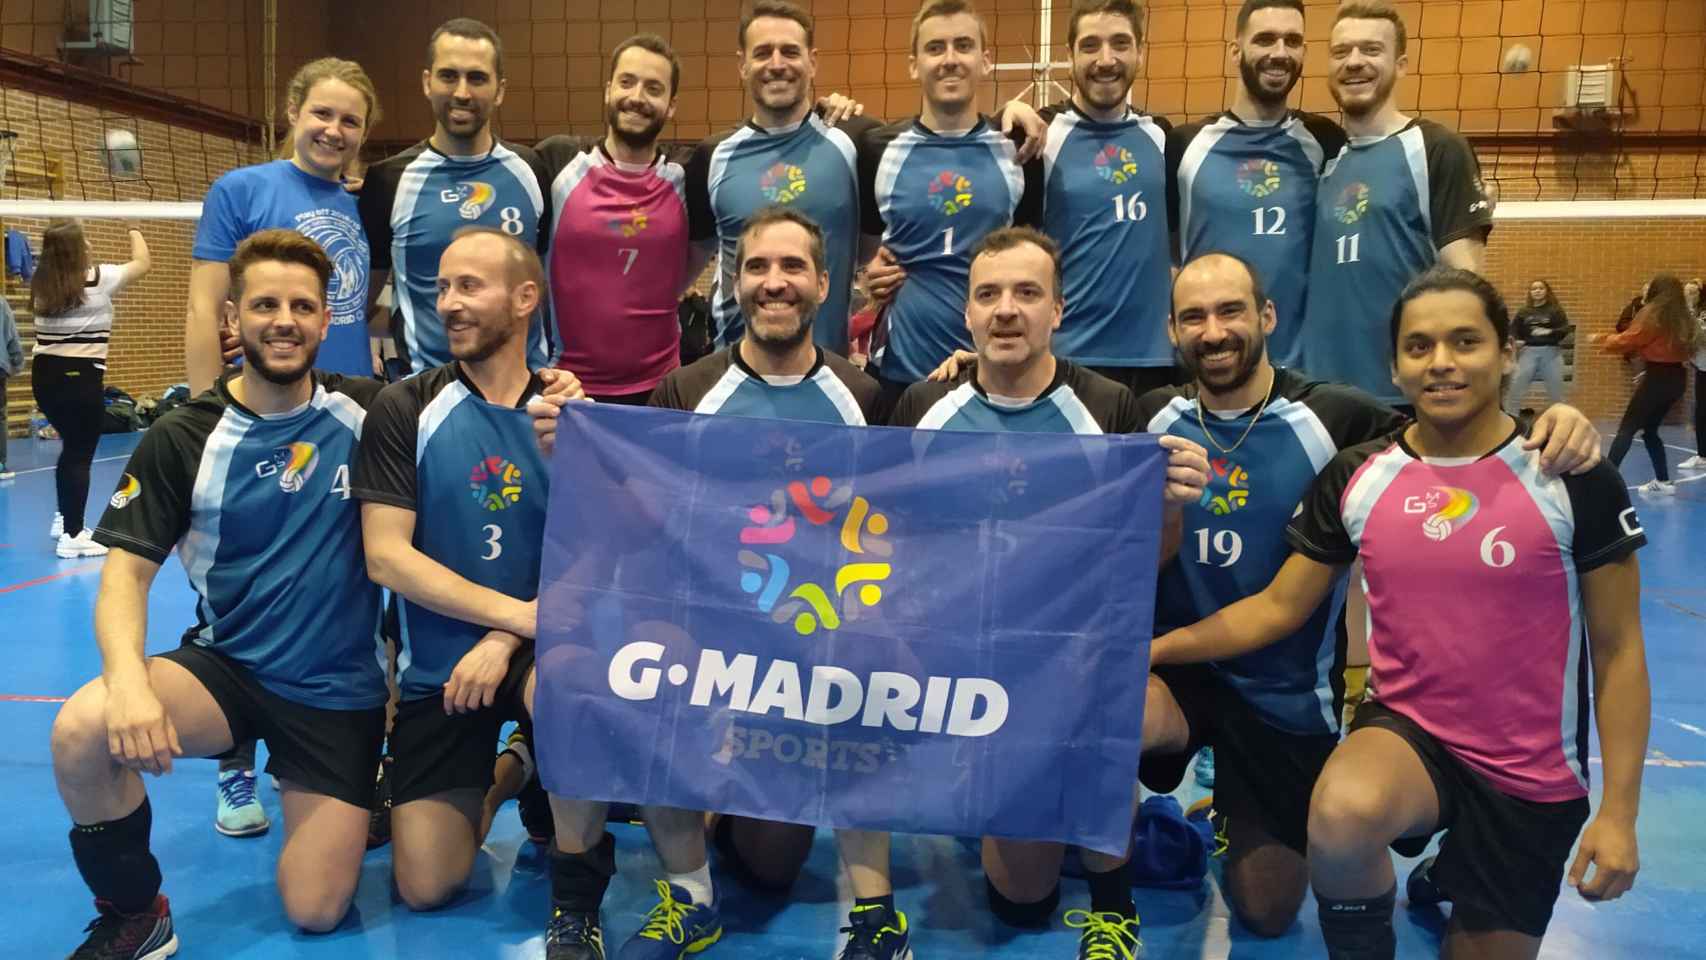 GMadrid Sports, equipo de voleibol madrileño